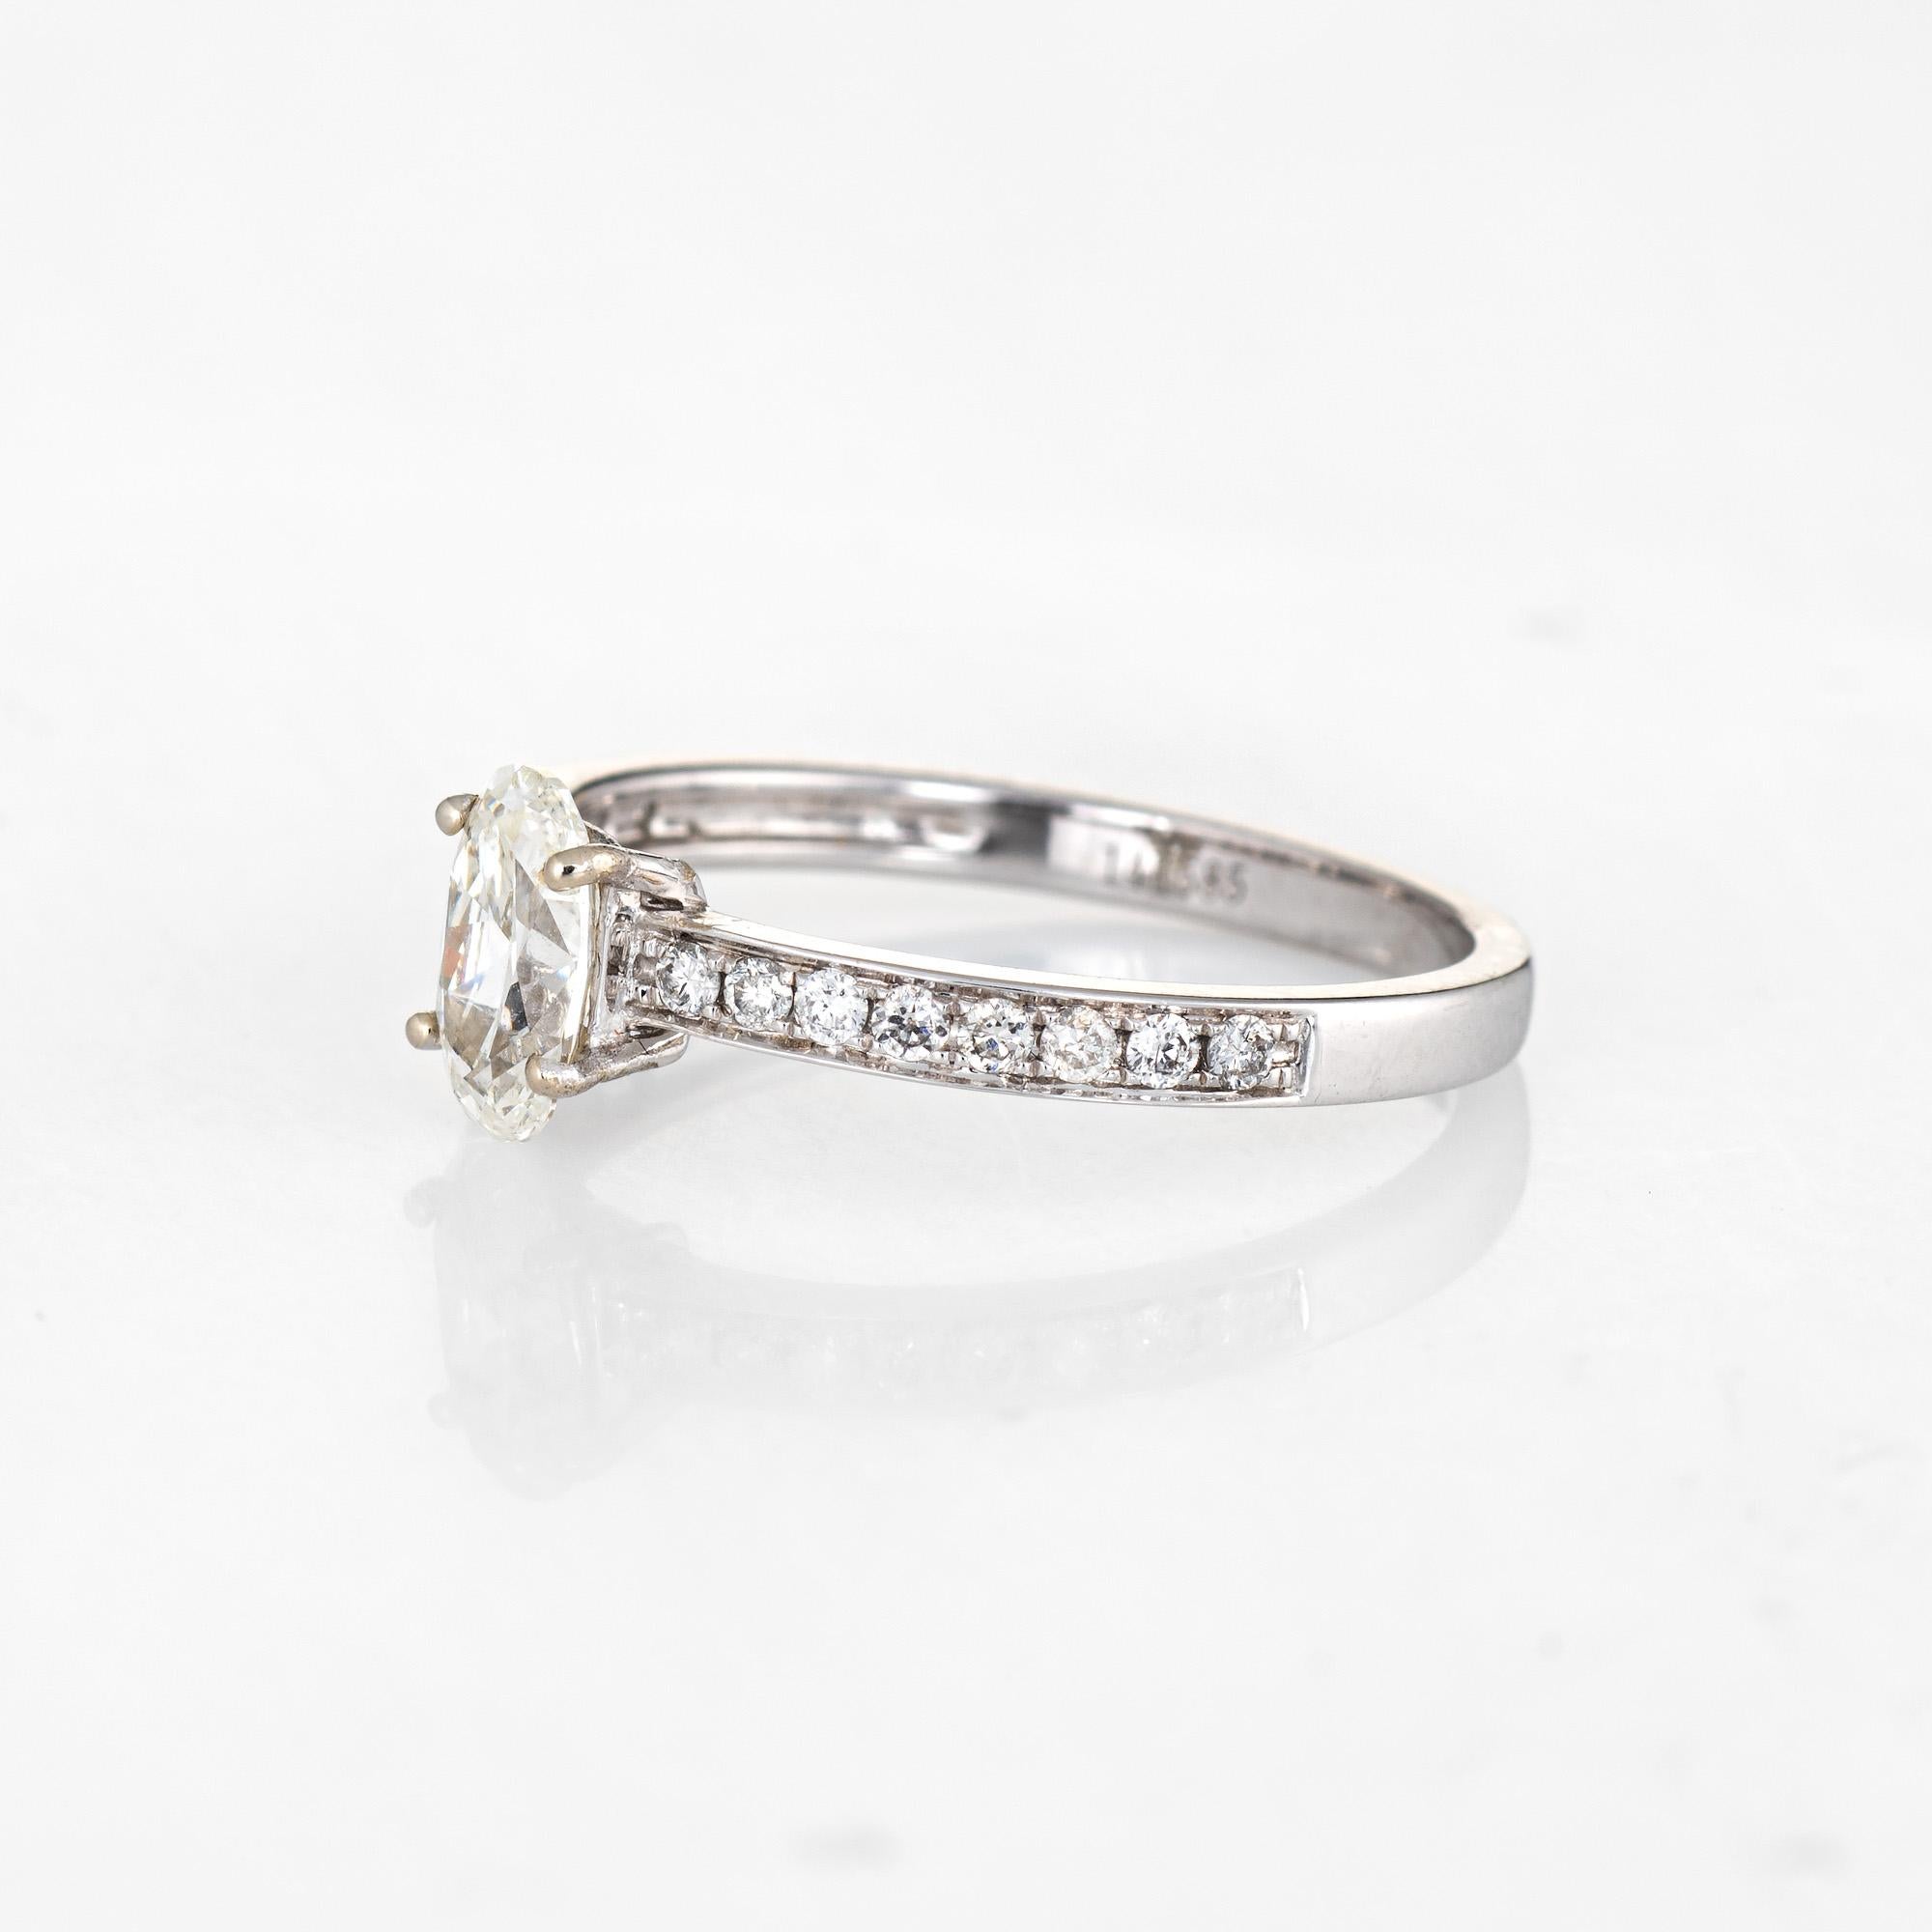 2 carat diamond ring